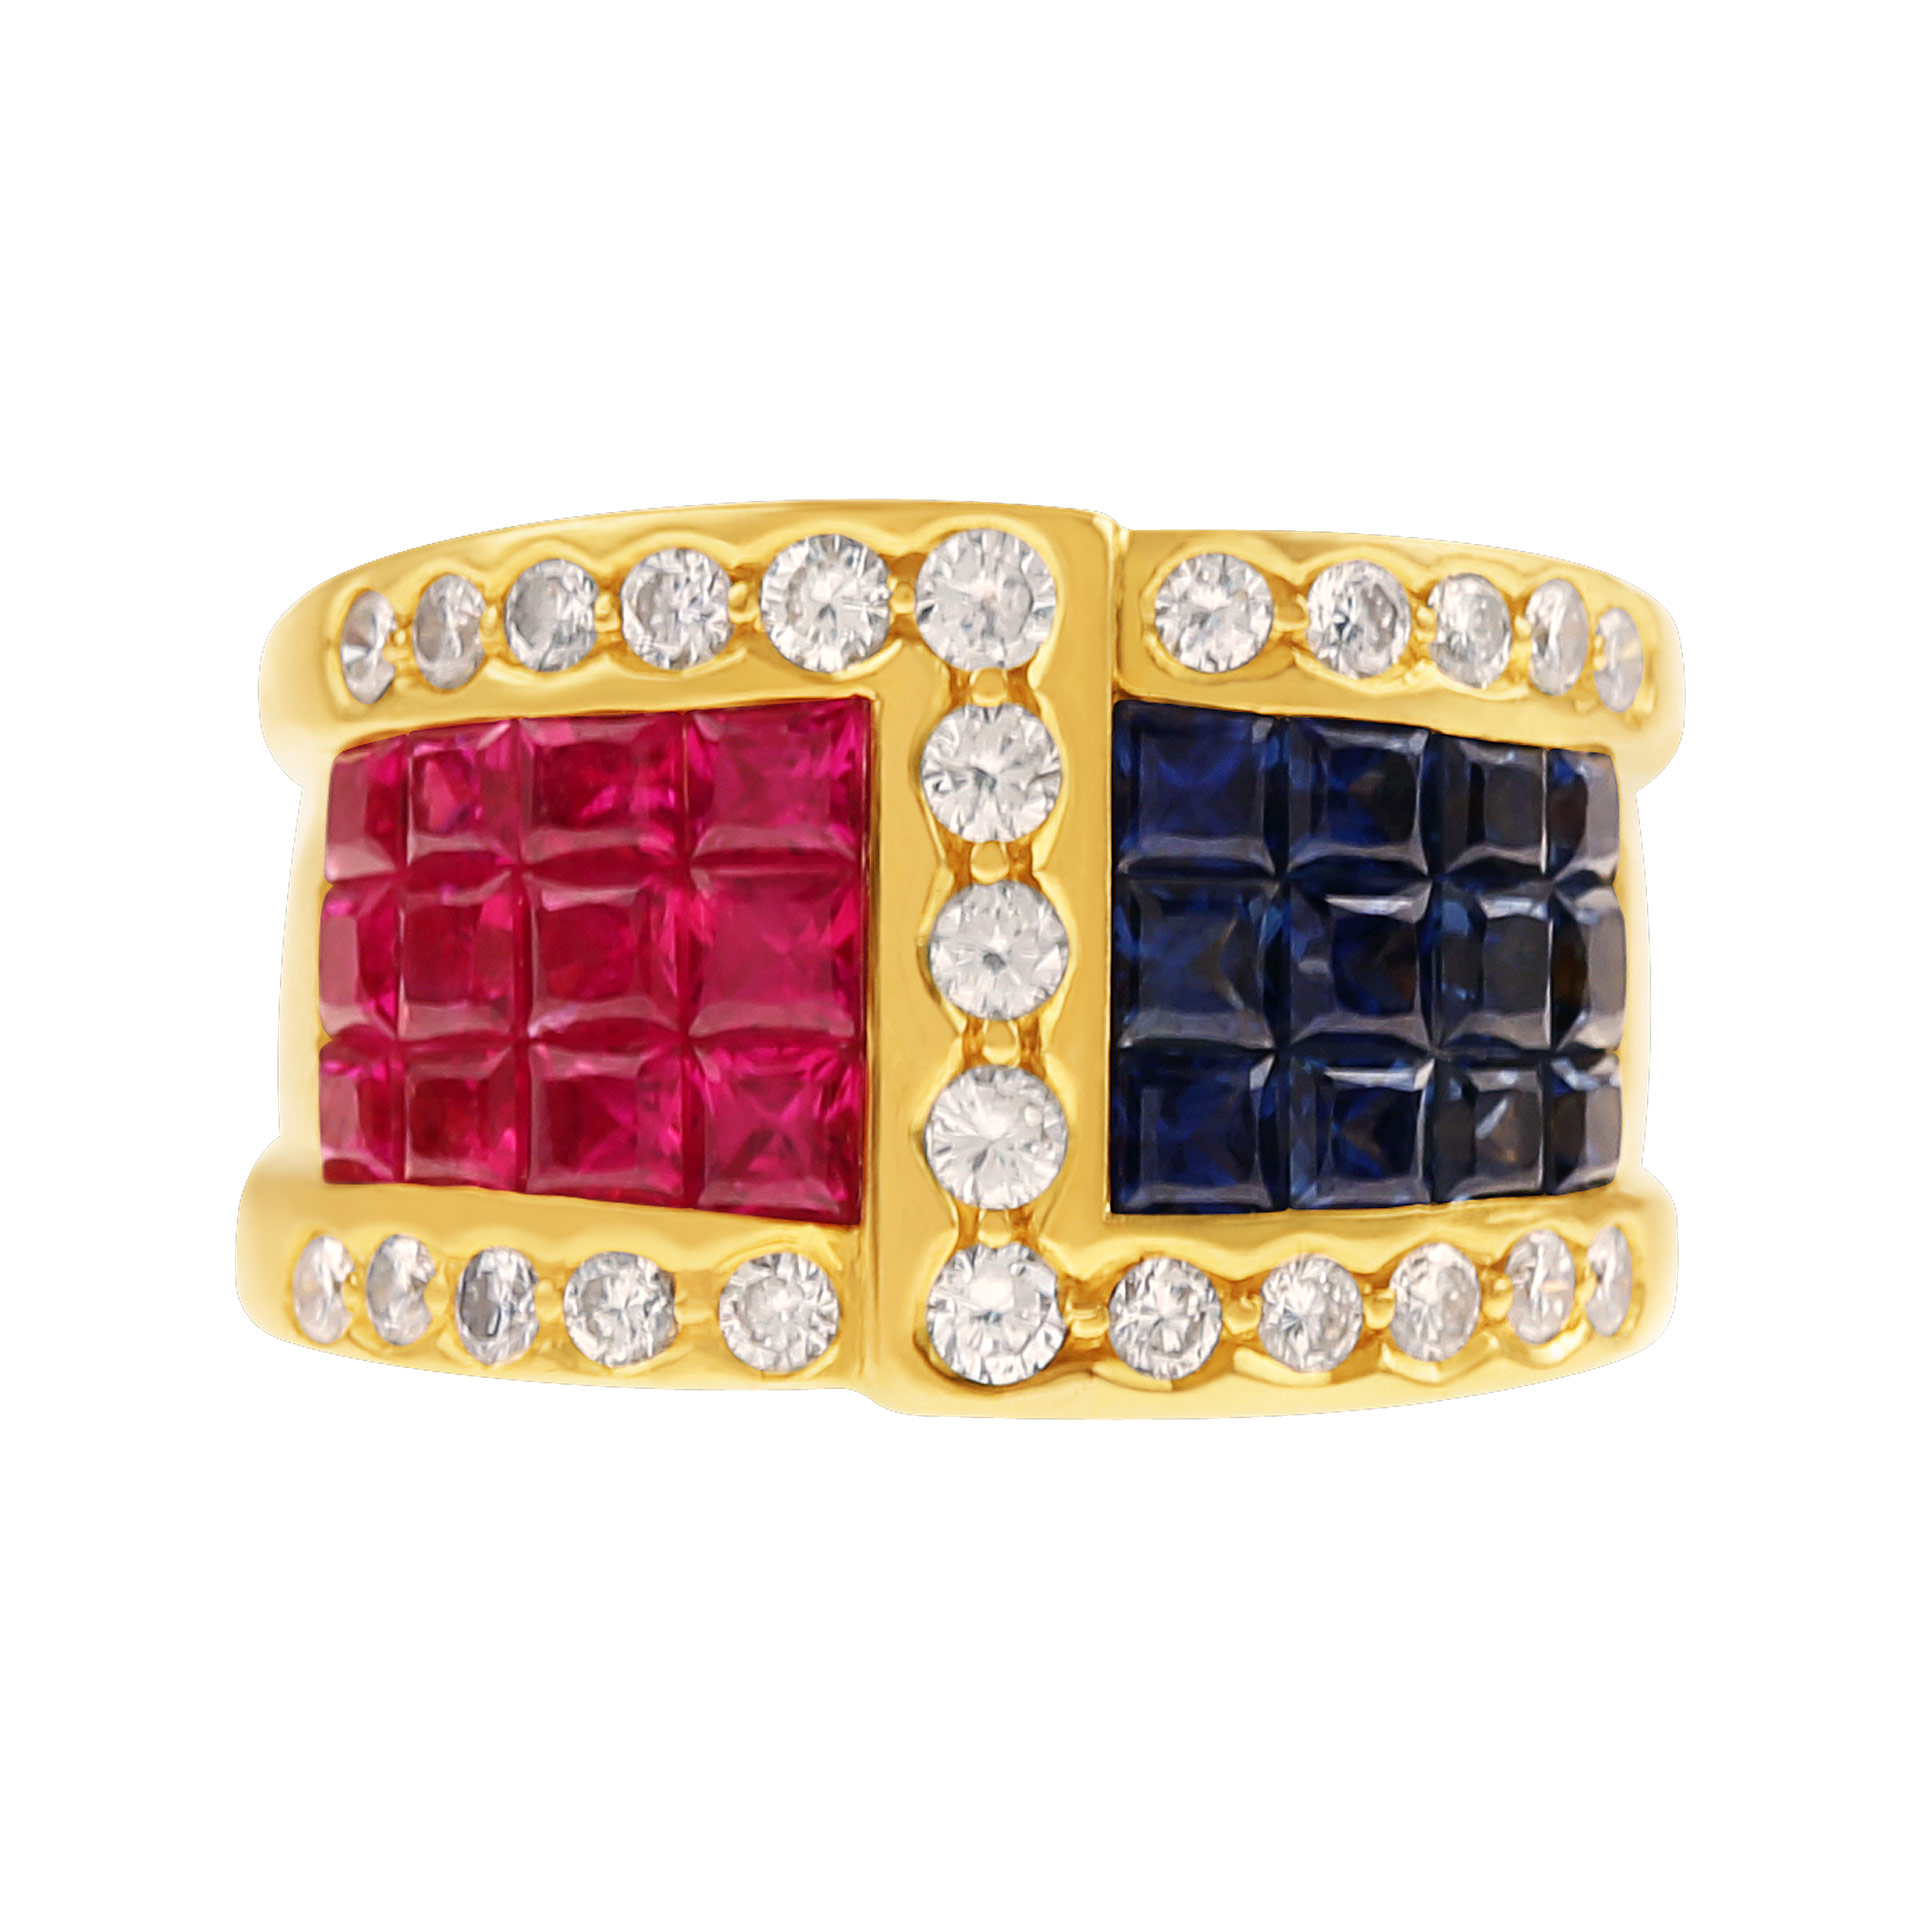 Sapphire, ruby & diamond ring in 18k yellow gold